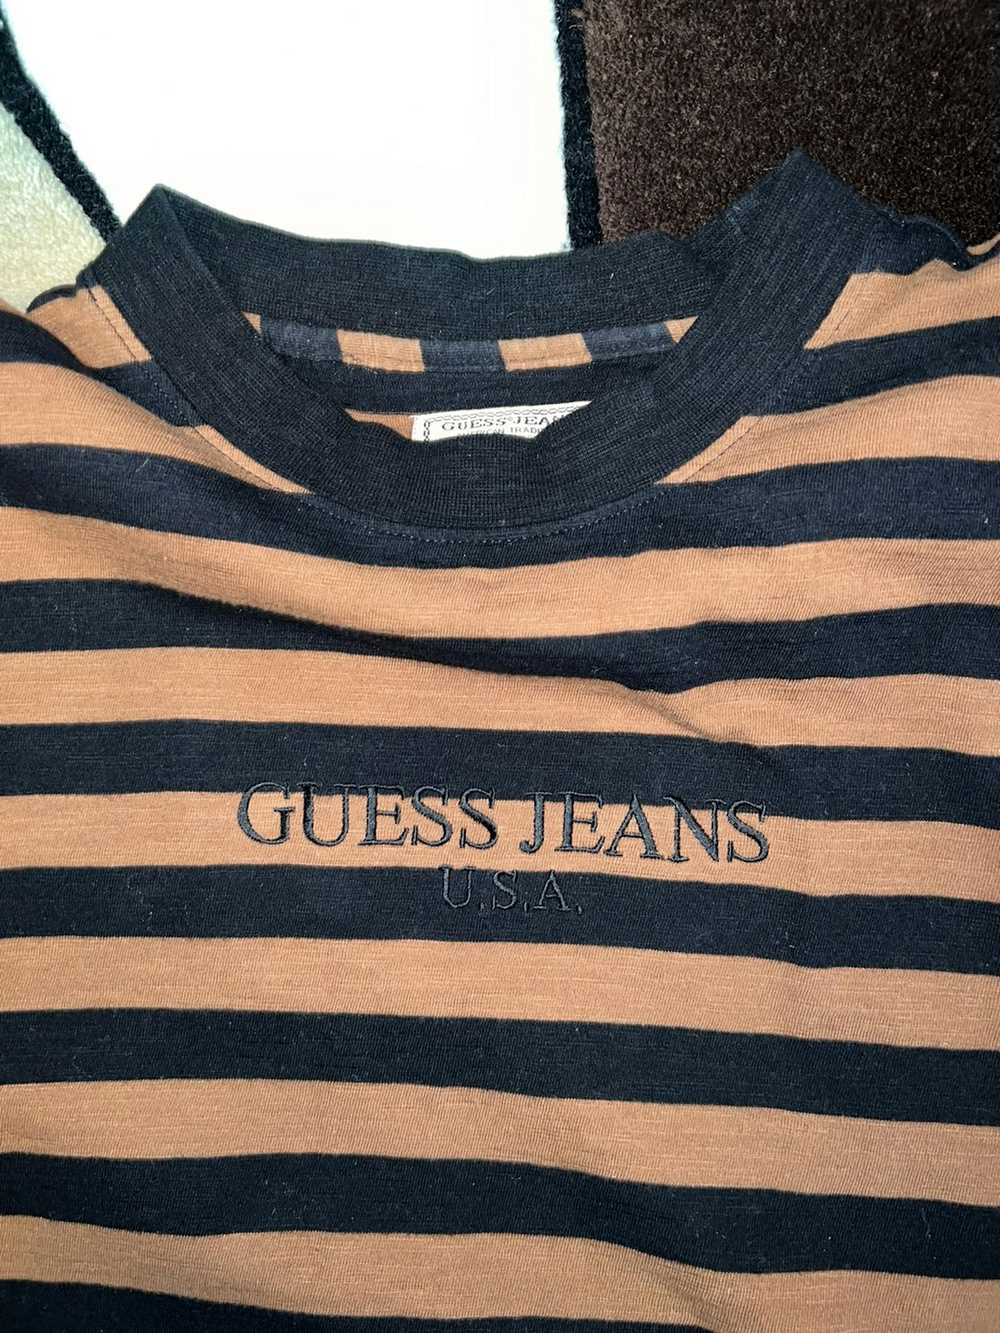 Guess Vintage Guess stripe shirt - image 1